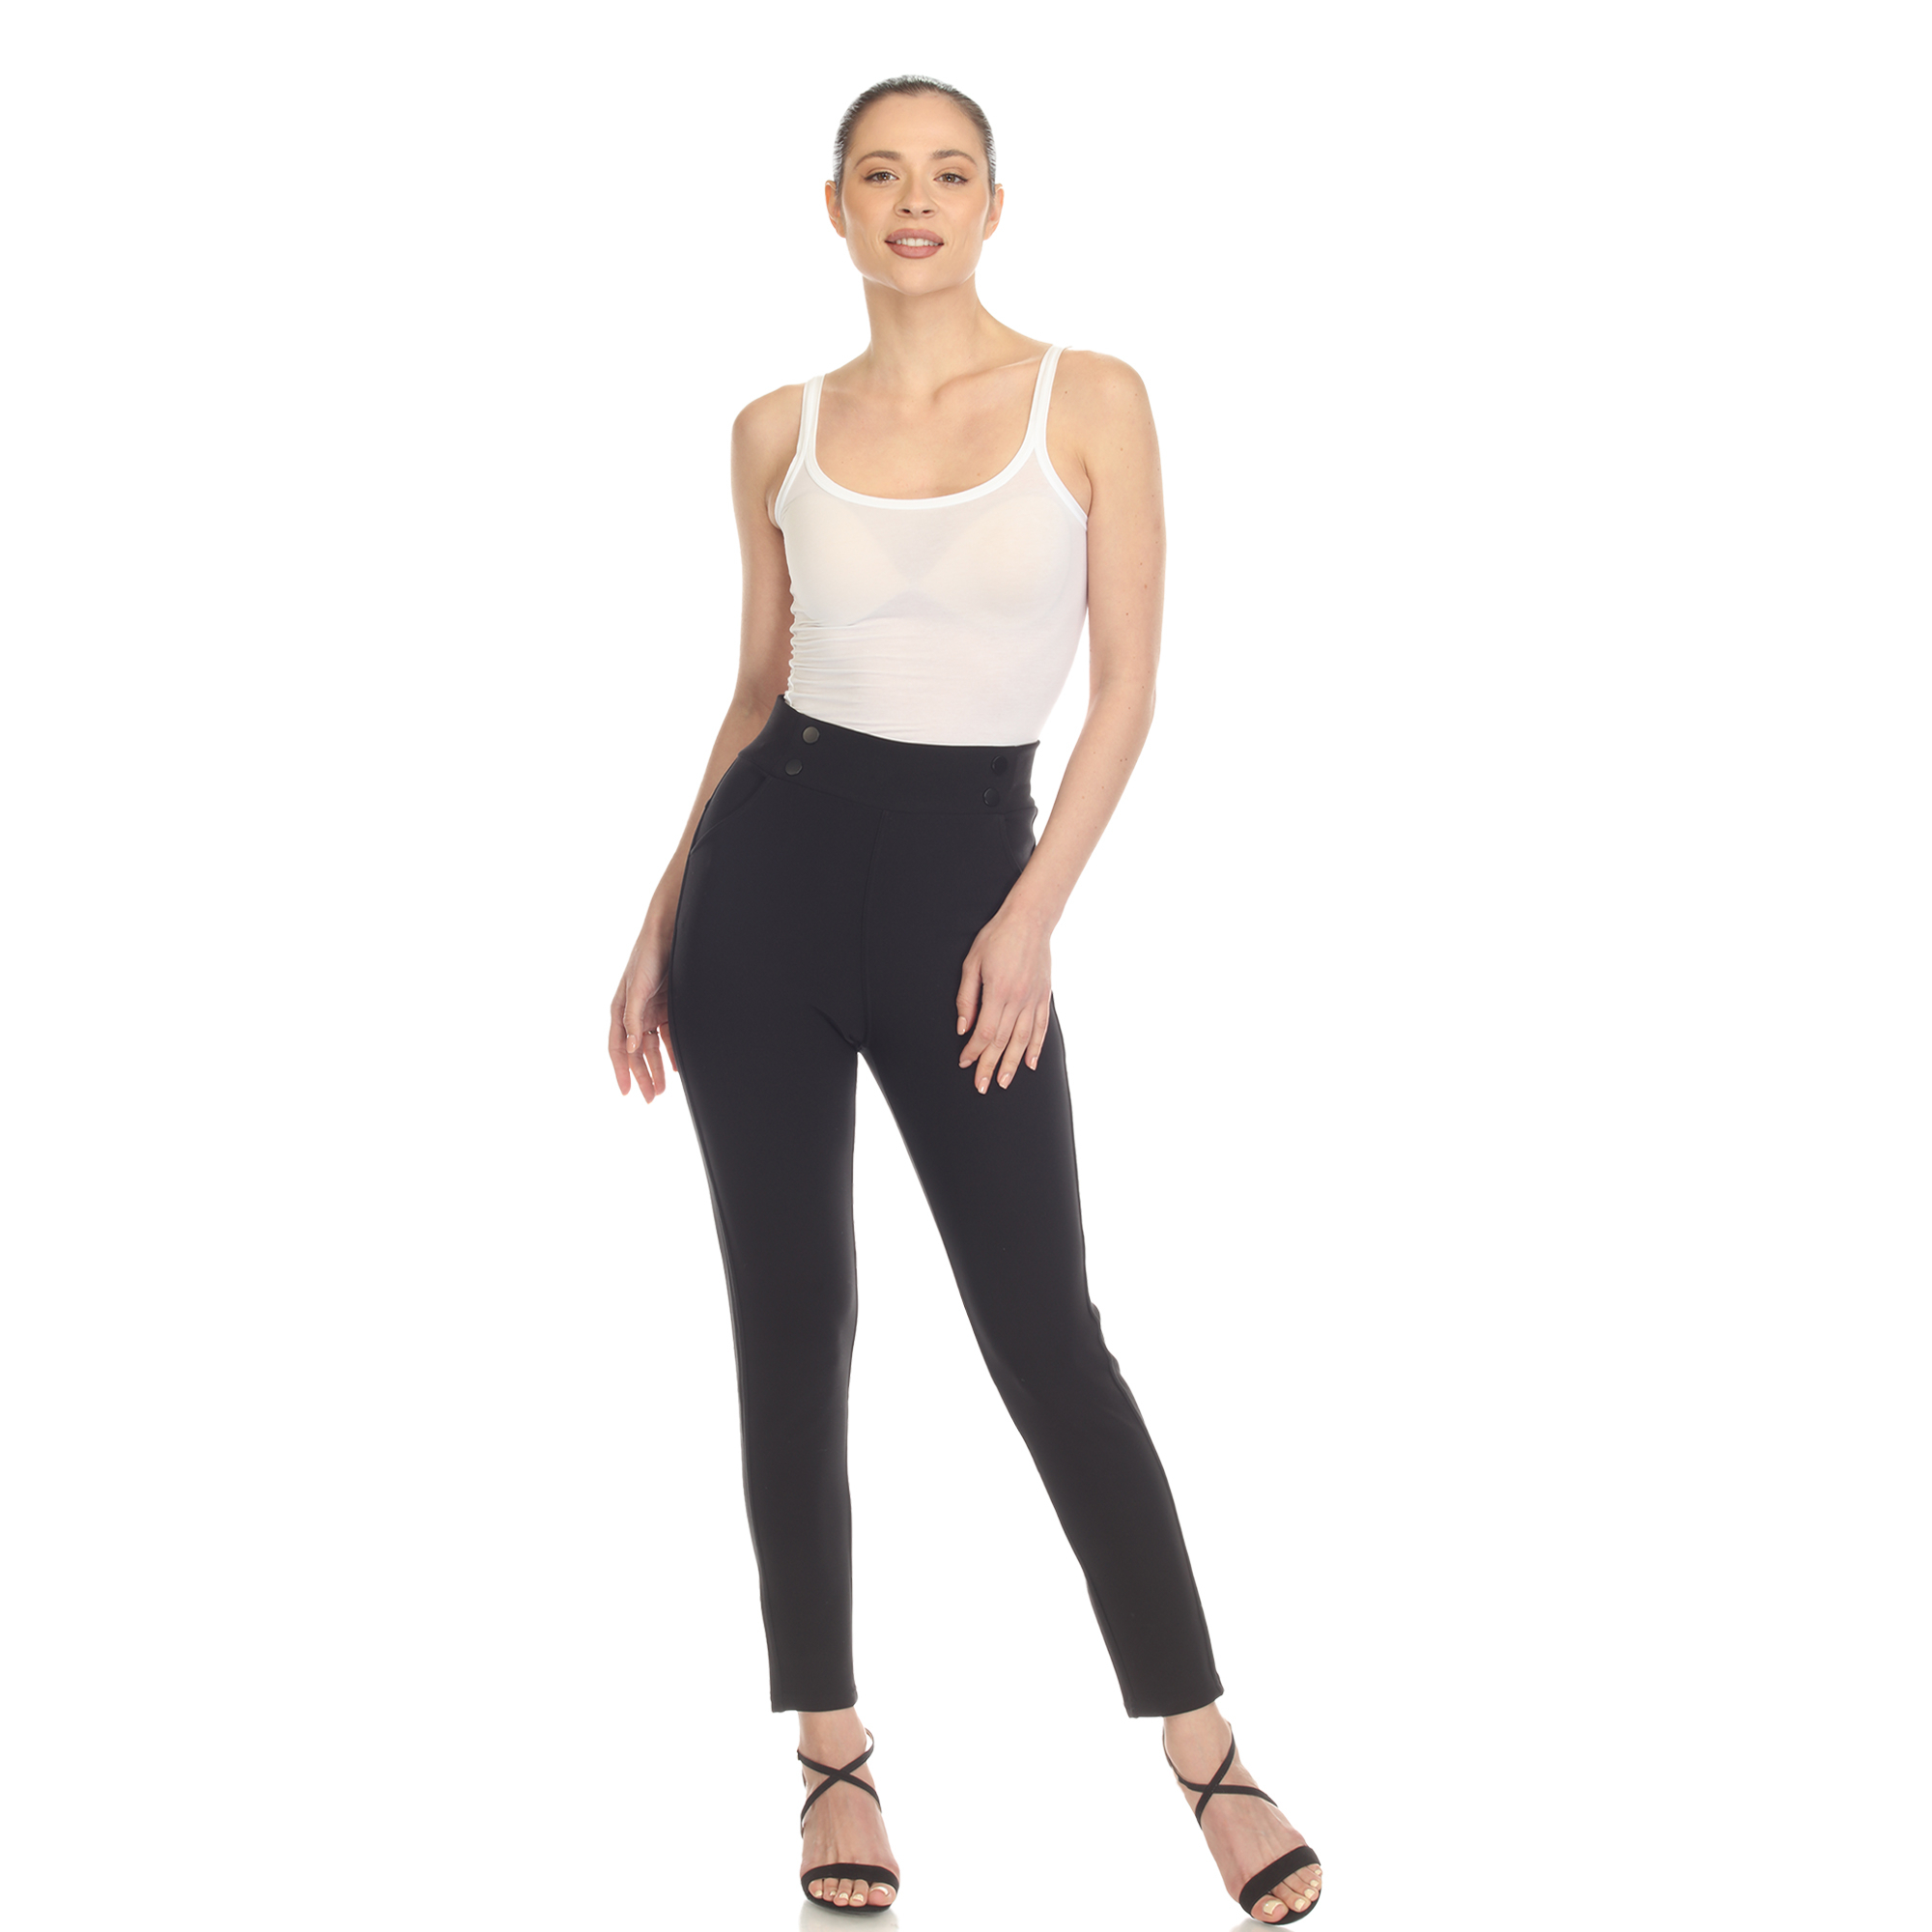 White Mark Women's Super Soft Elastic Waistband High Waist Scuba Pants With Pockets - Black, 3X